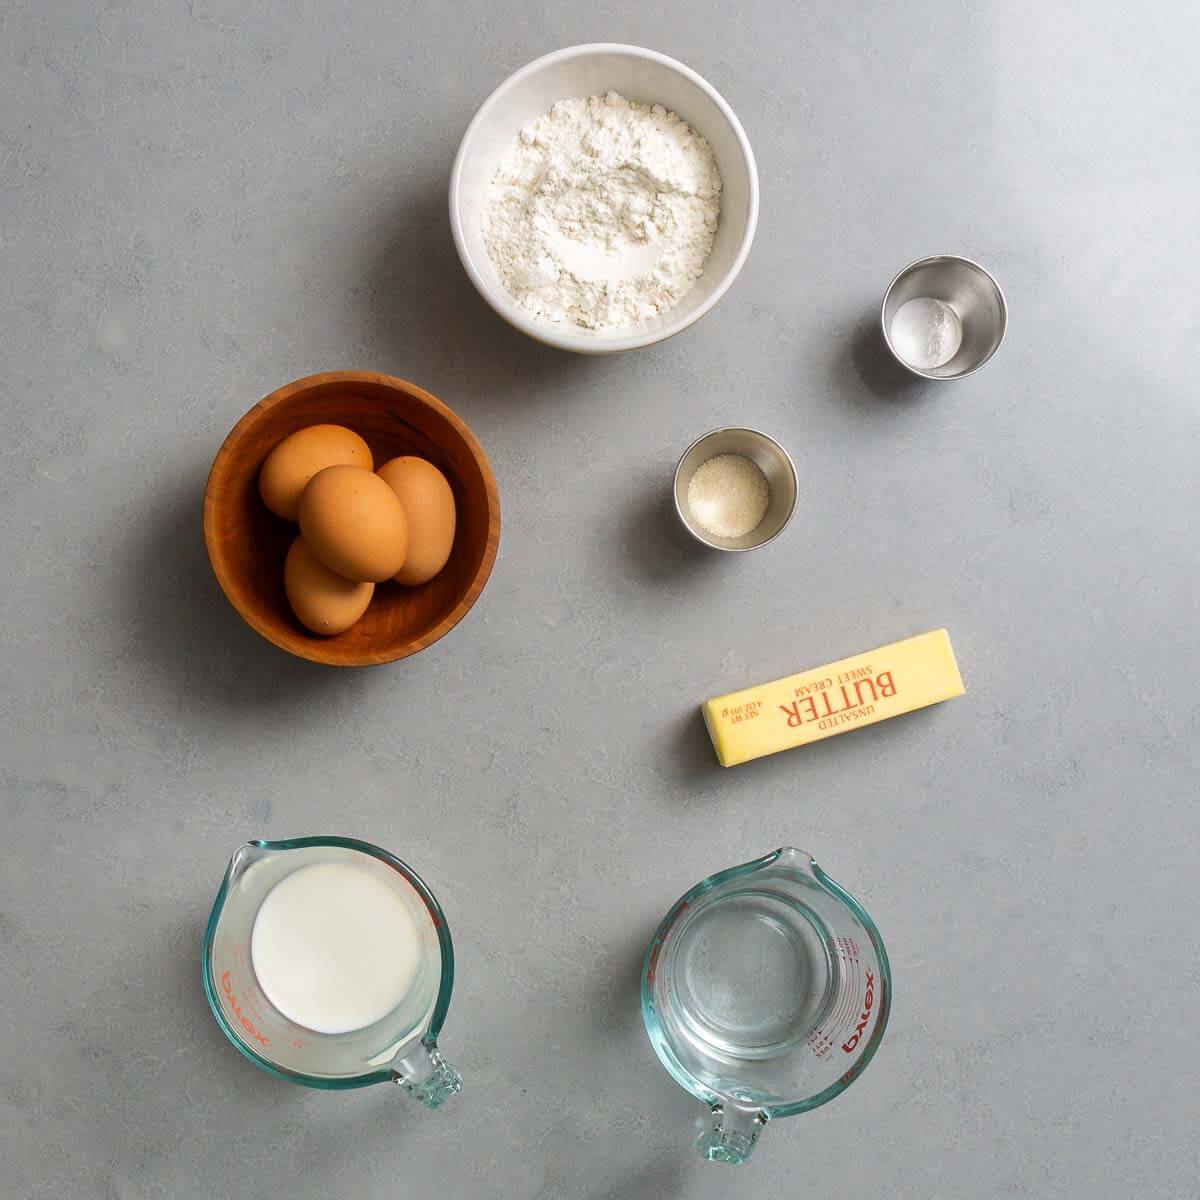 Choux pastry Ingredients shown: flour, salt, sugar, eggs, butter, milk, and water.